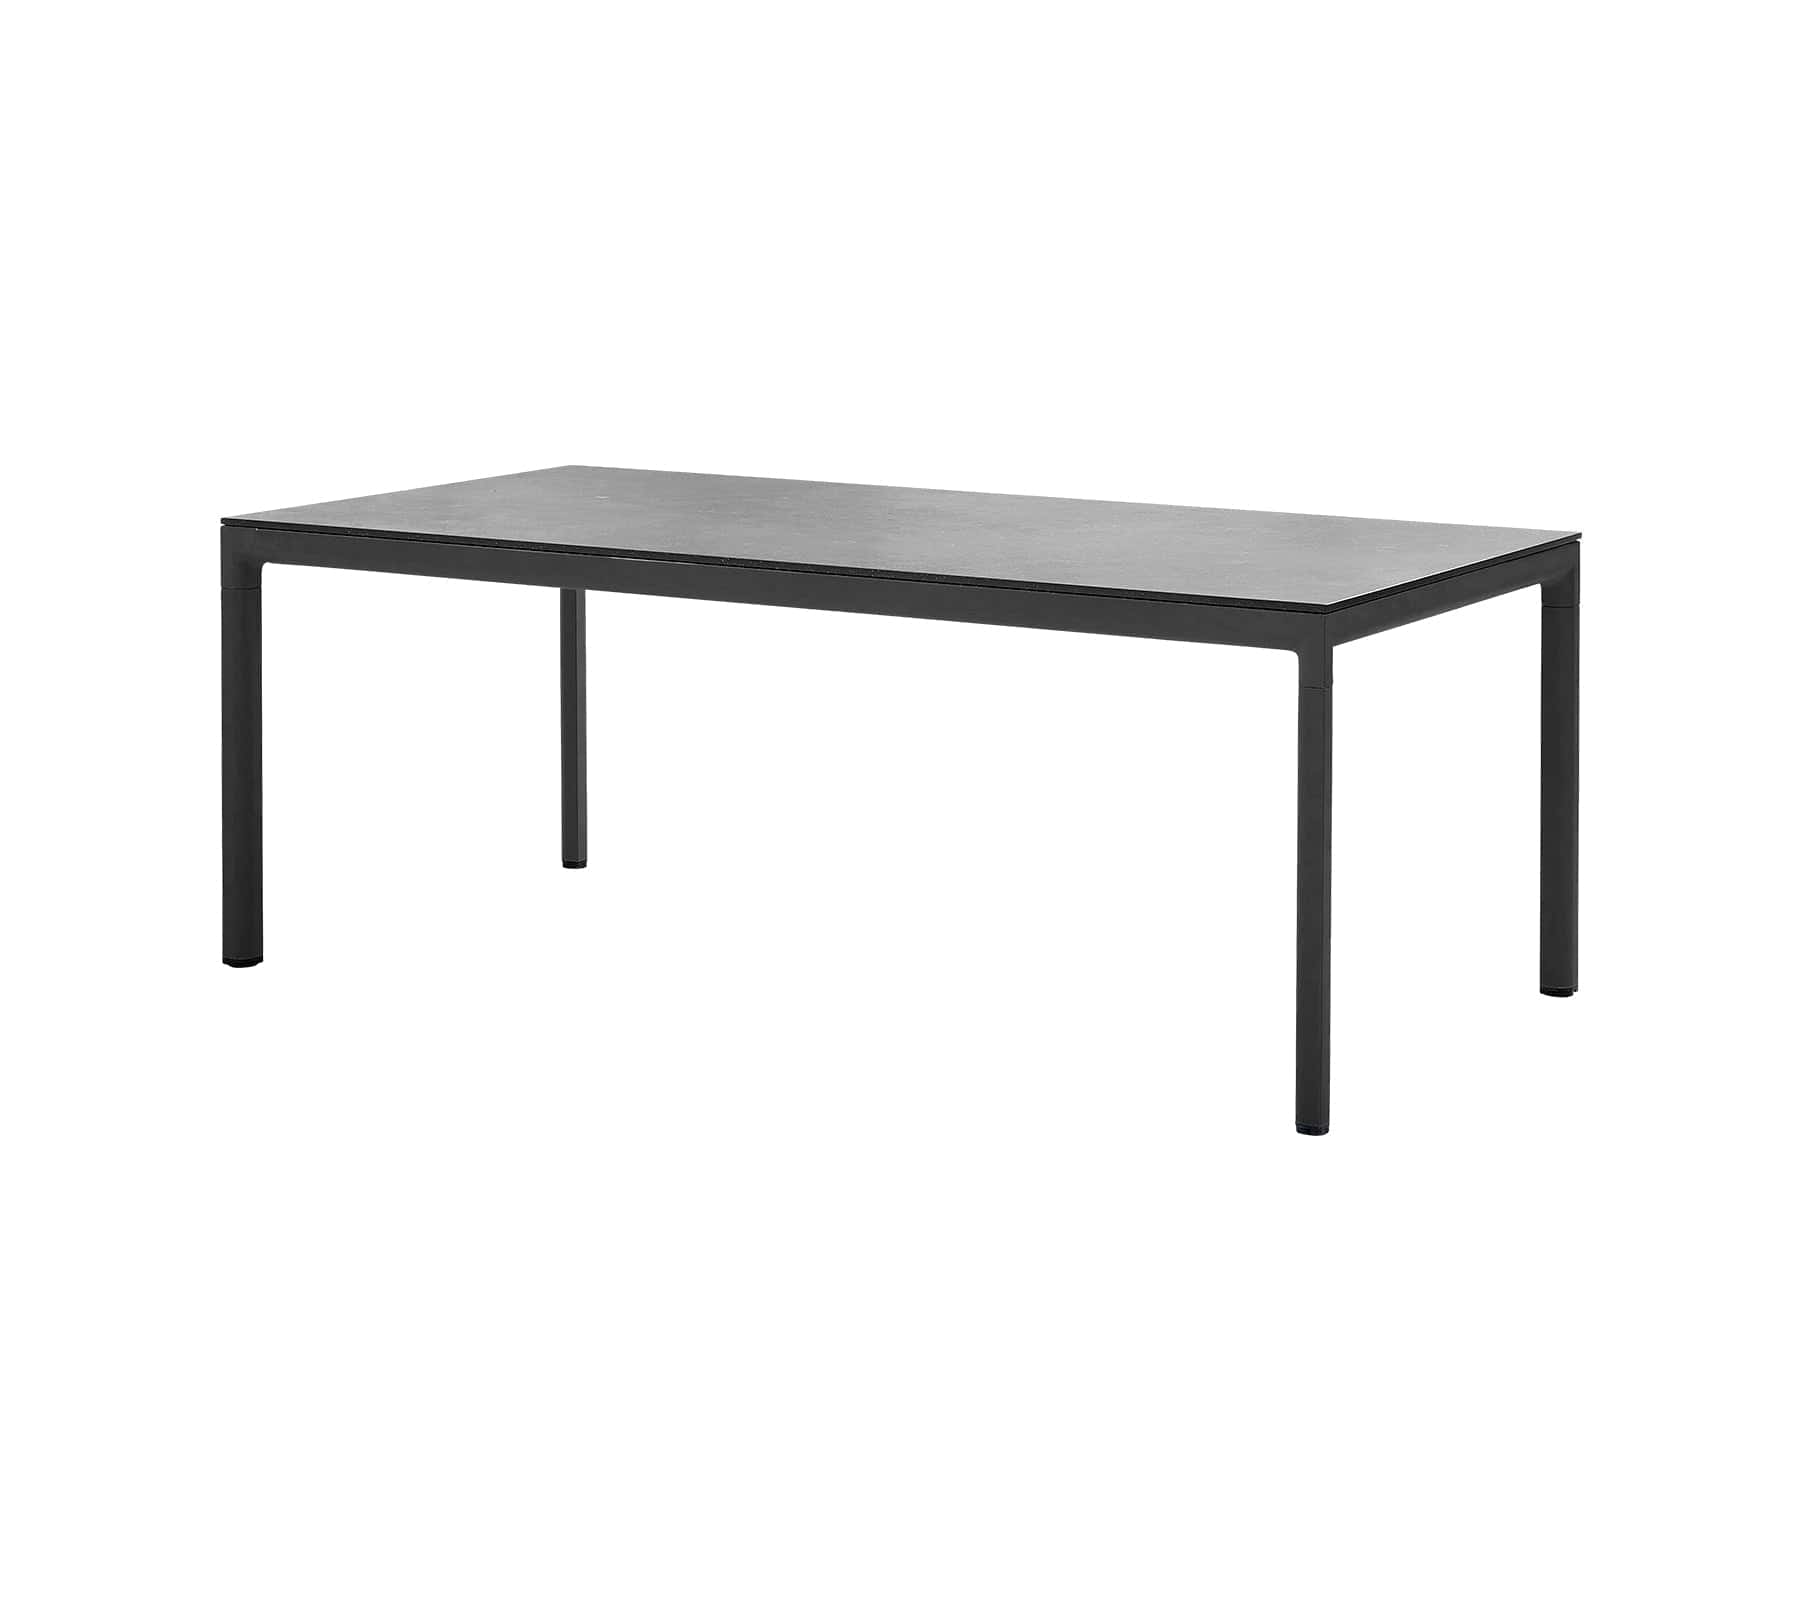 Cane-Line Denmark Outdoor Dining Table Lava grey - Aluminium / Fossil black - Ceramic Copy of Cane-Line - Drop dining table base, 78.8x39.4 inches | Aluminium | 50406AL